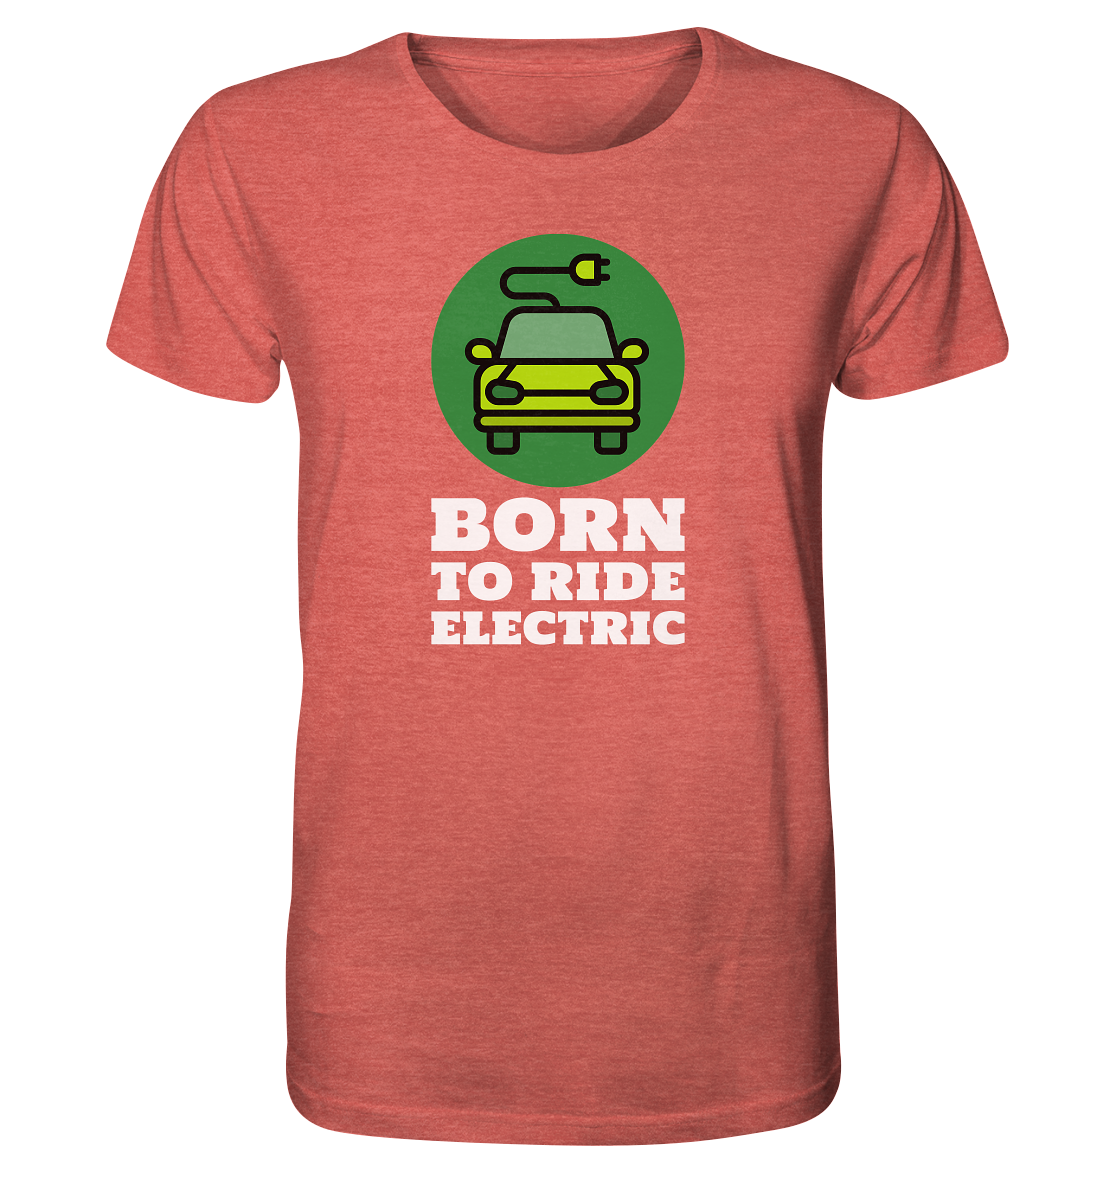 Born to ride electric ORGANIC - Organic Shirt (meliert)